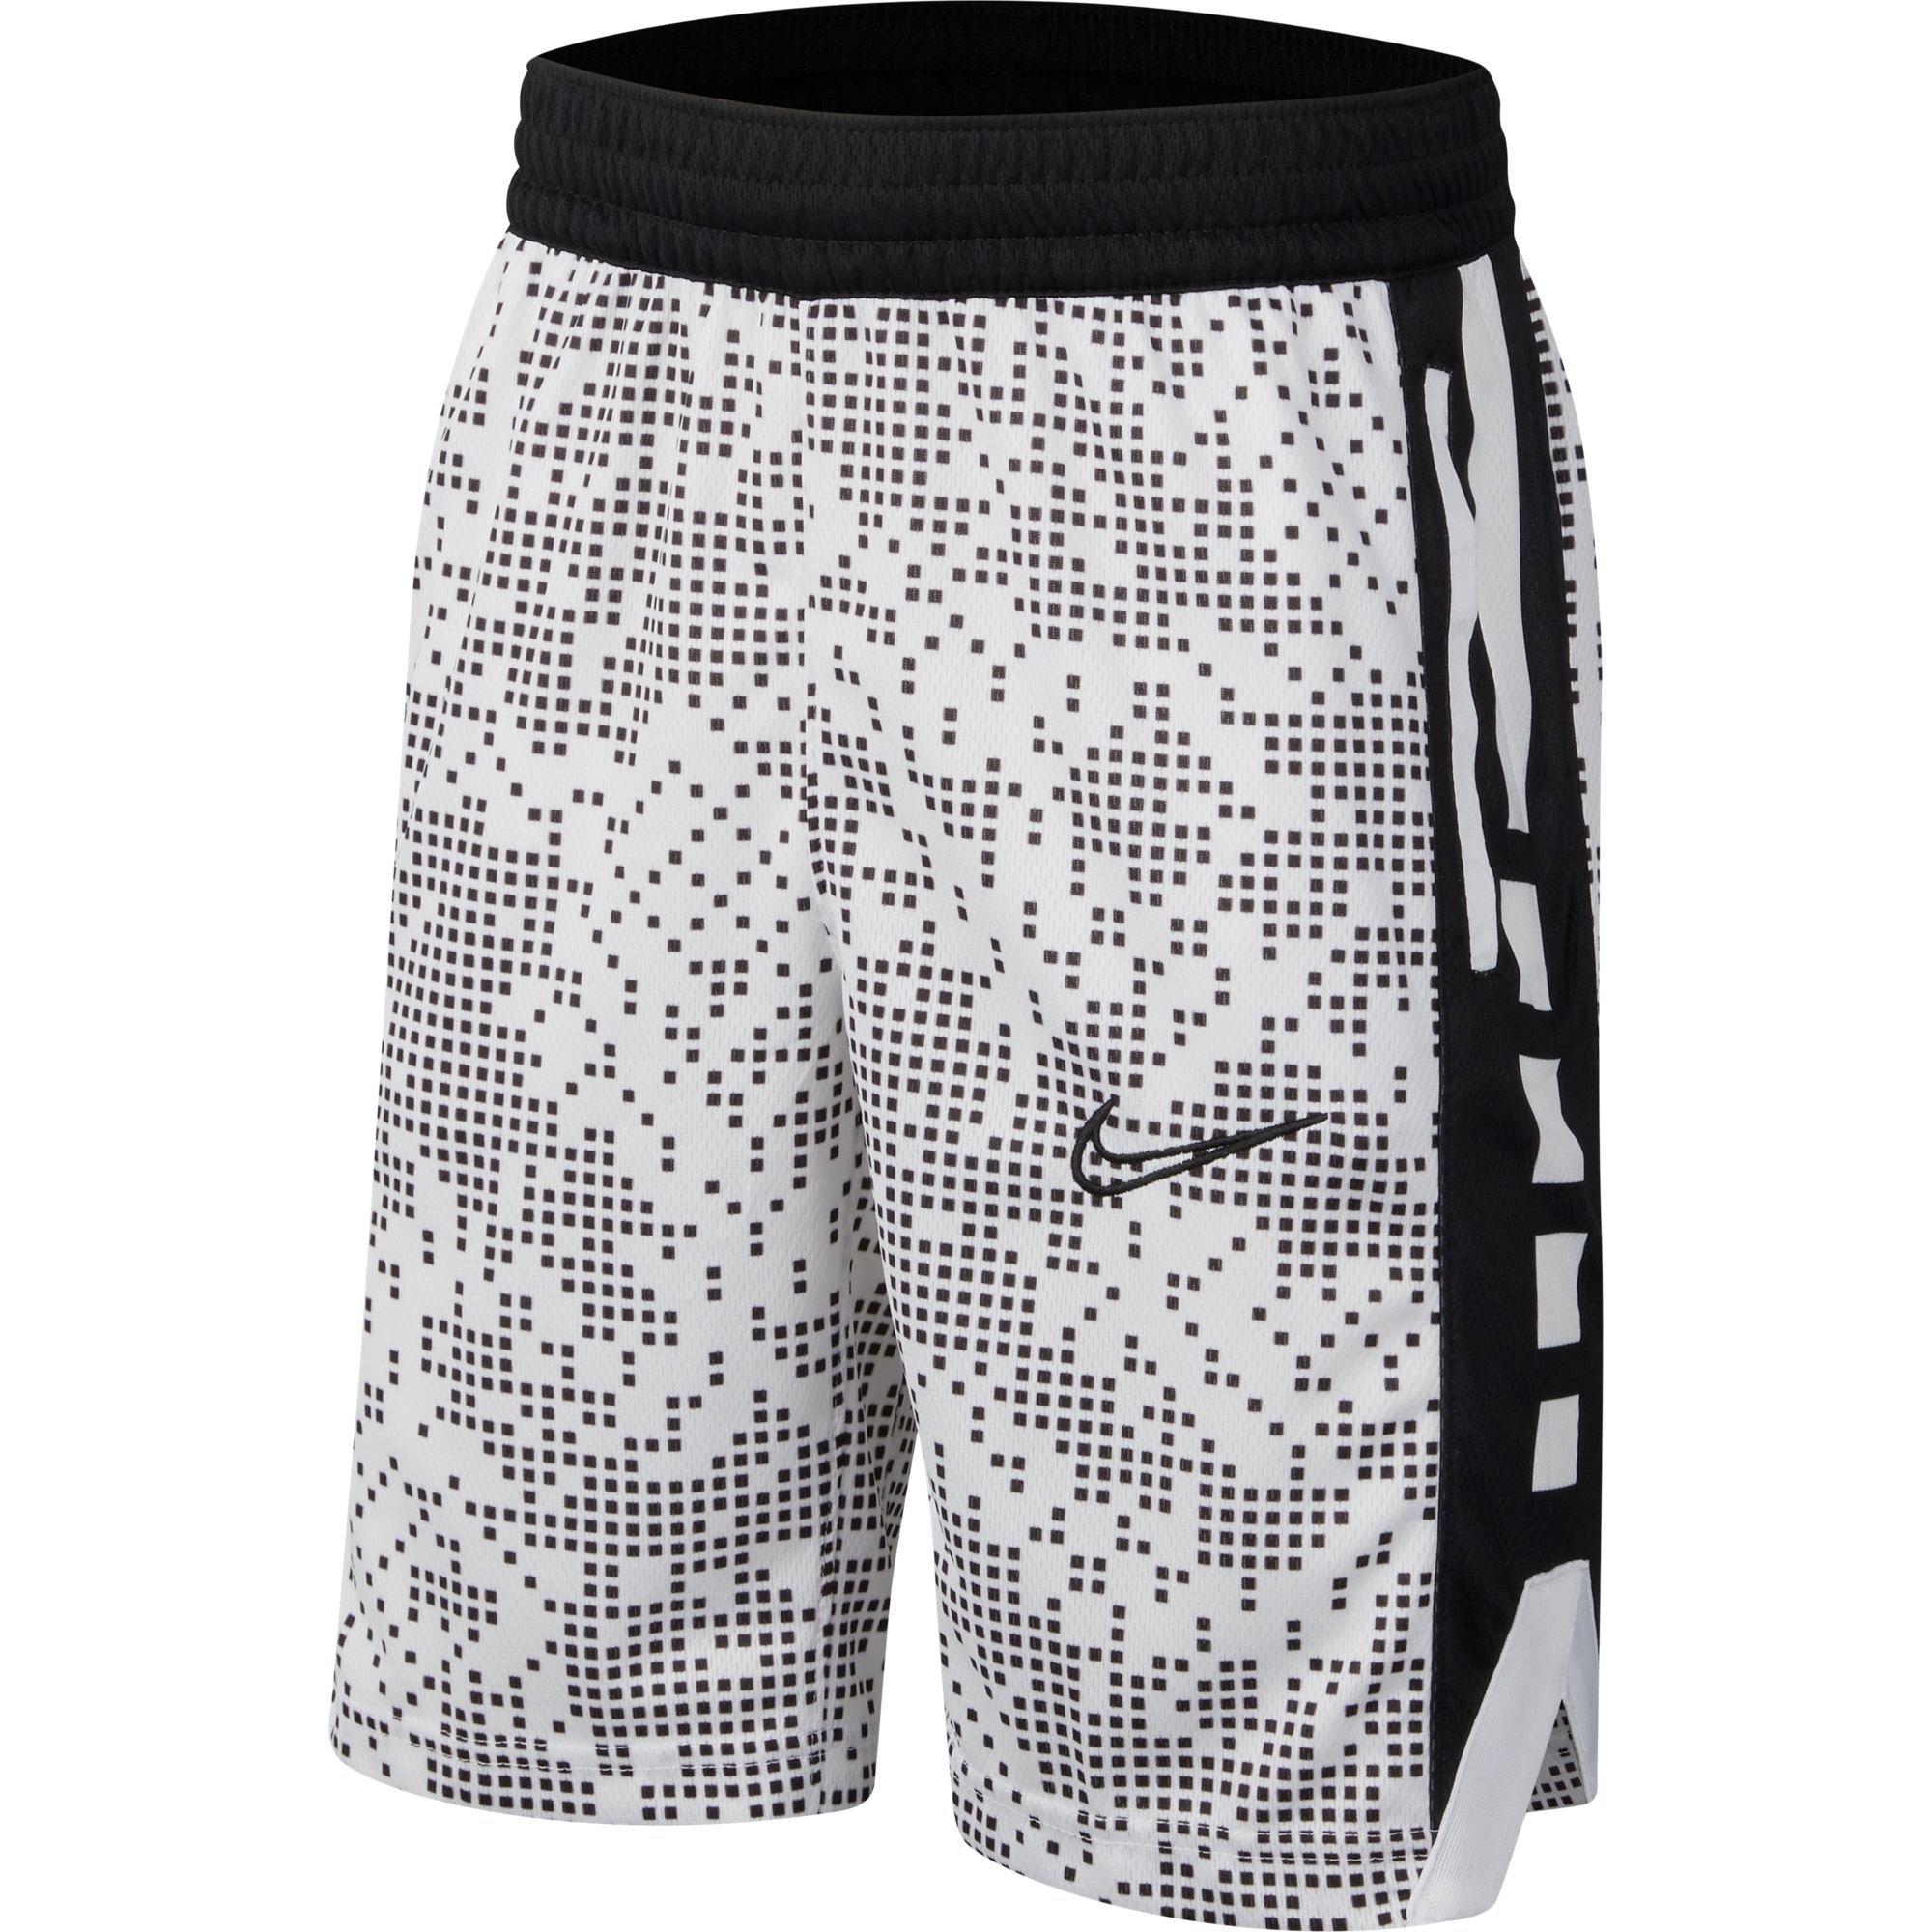 hibbett sports basketball shorts